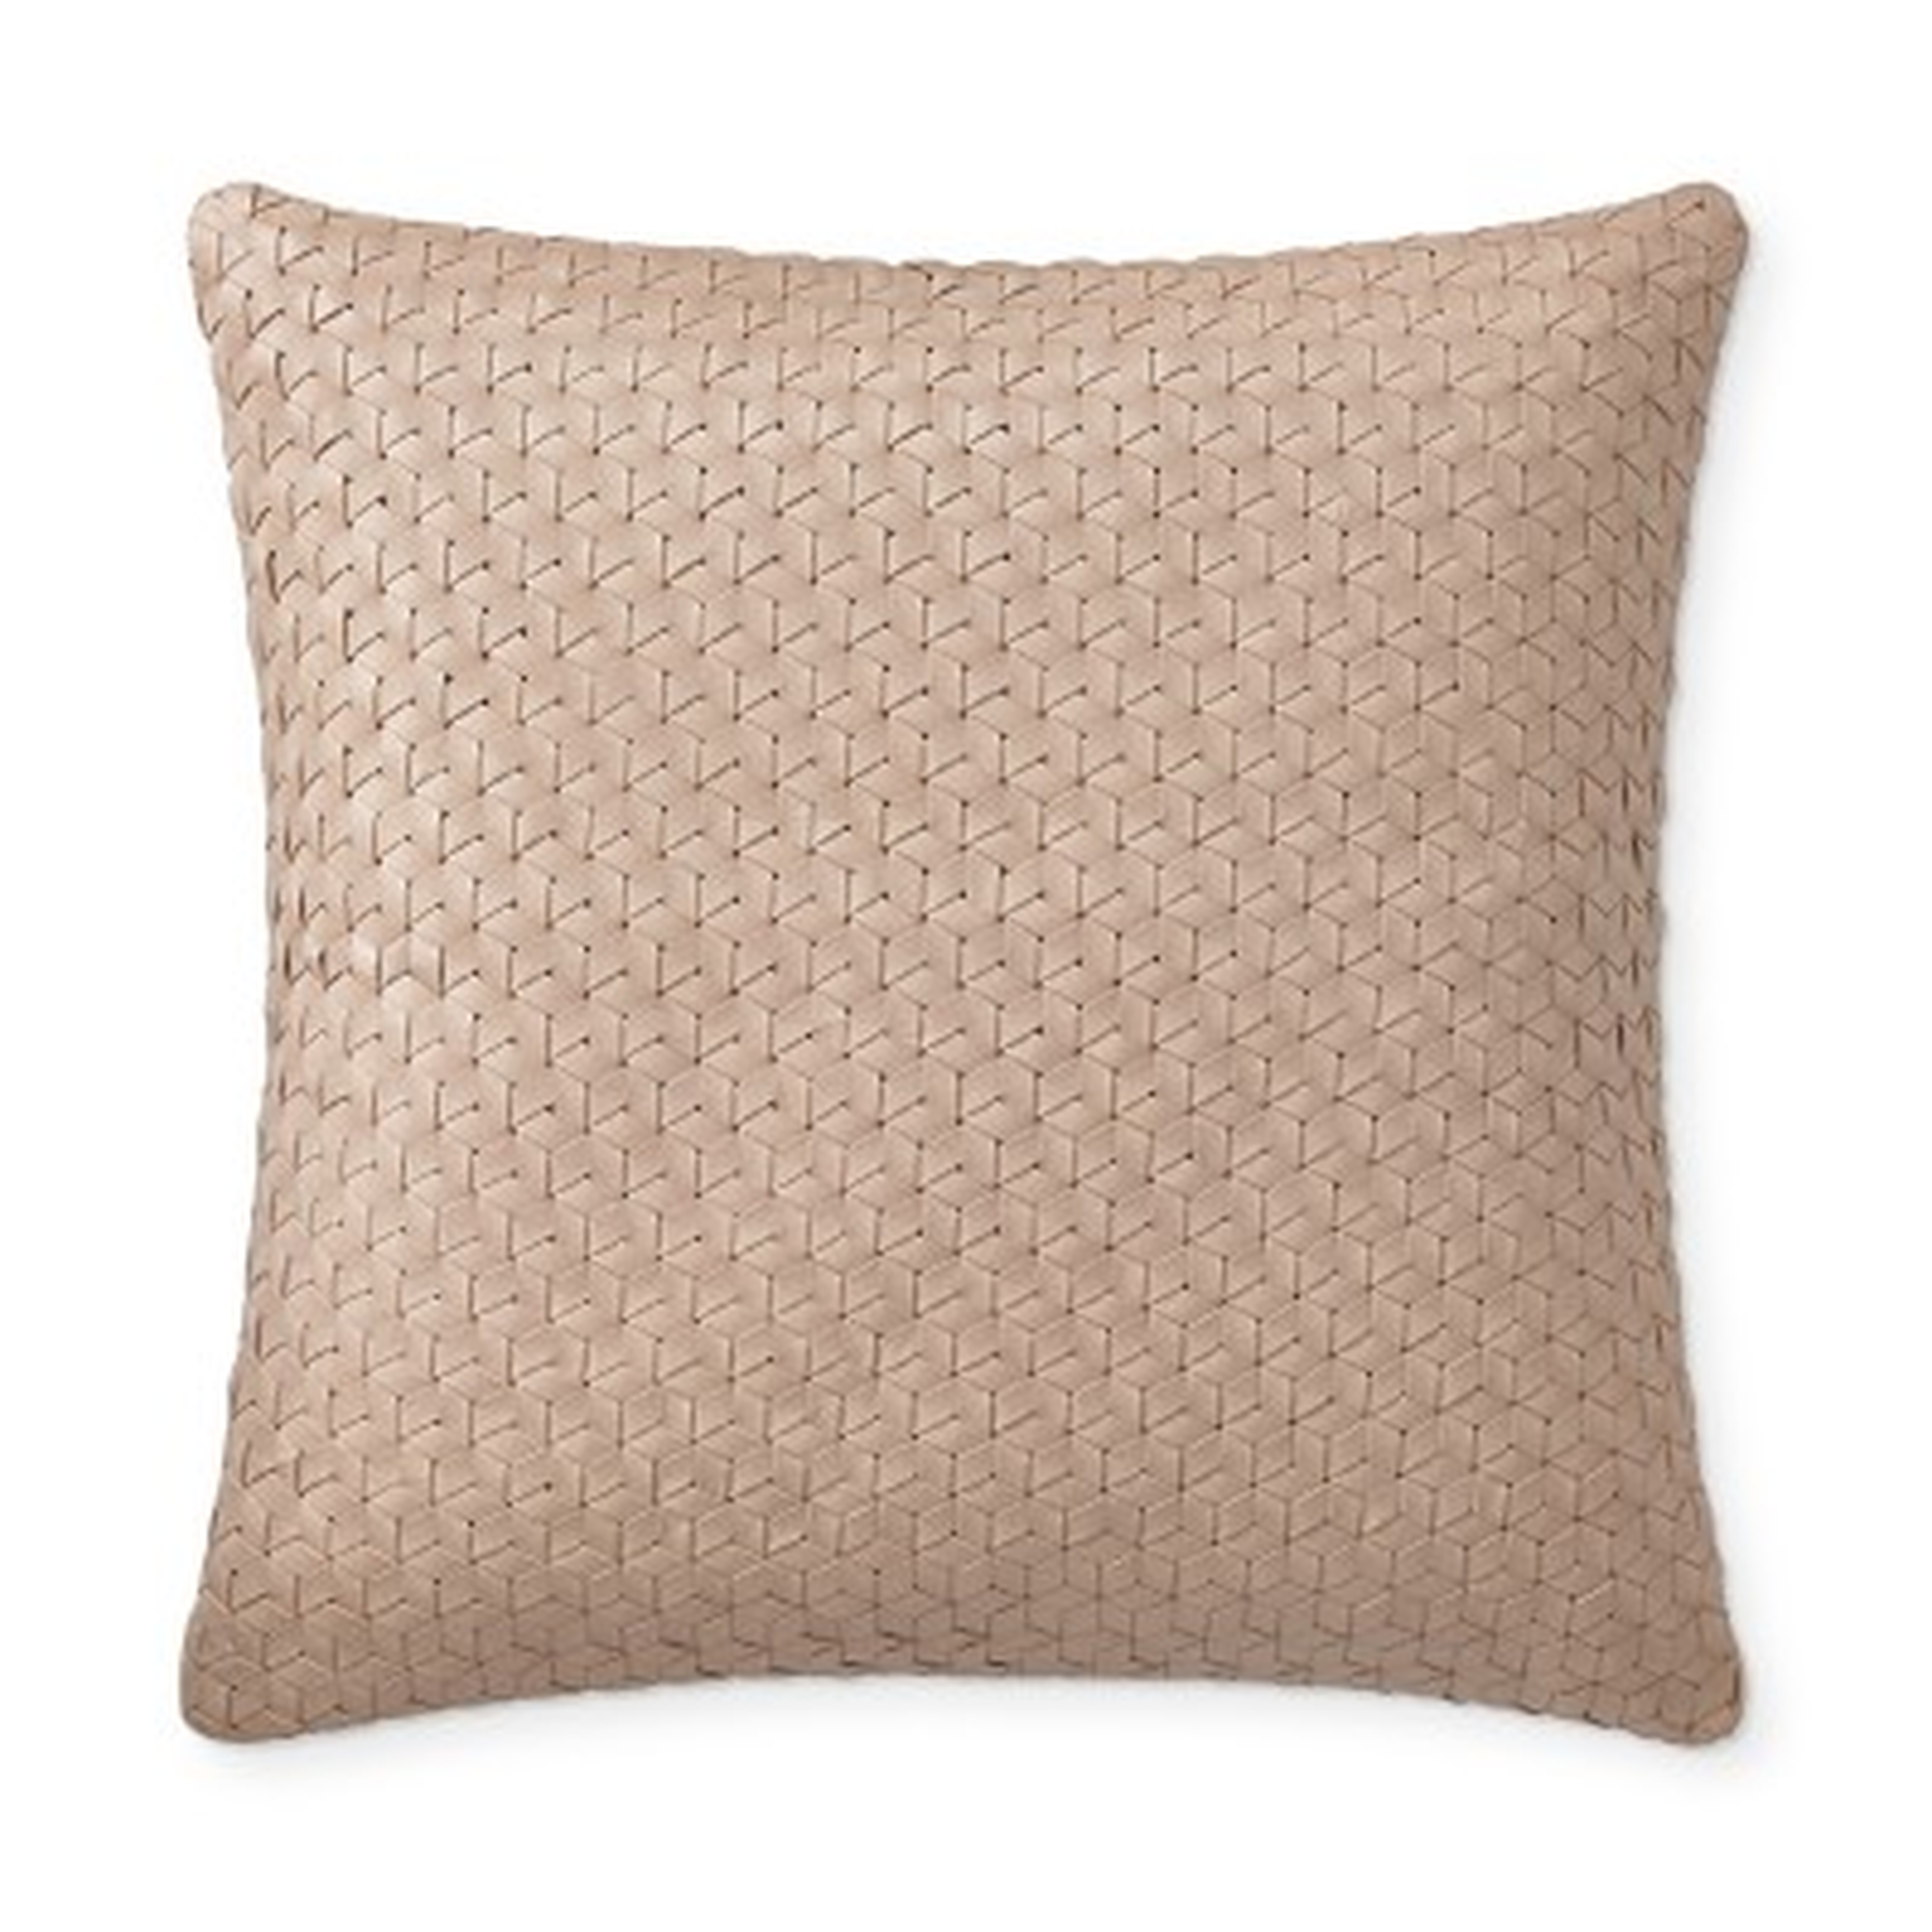 Interlace Leather Pillow Cover, 18" X 18", Blush - Williams Sonoma